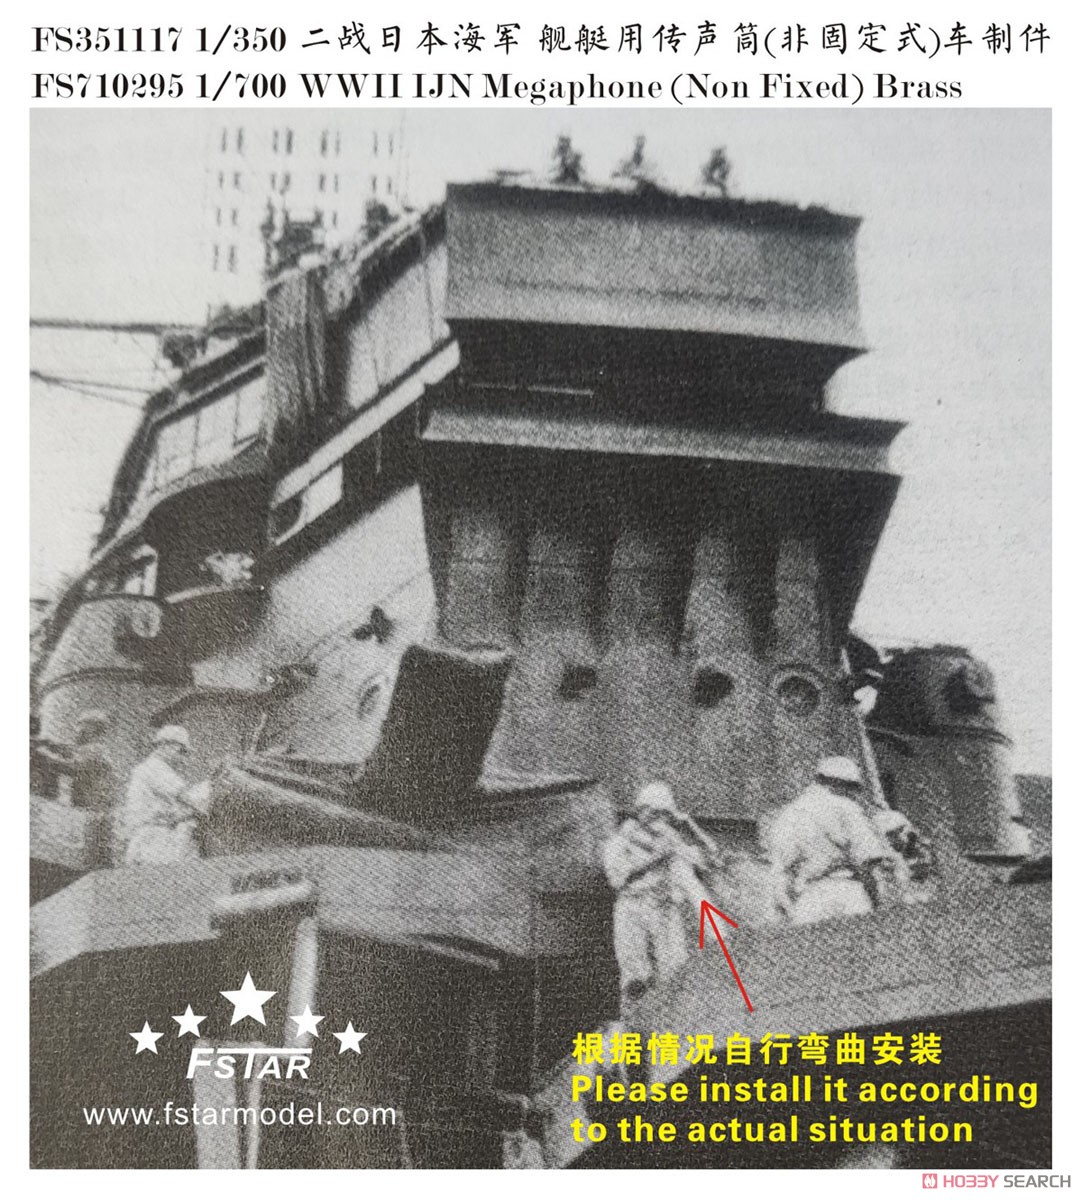 WW.II 日本海軍 伝声管 (非固定式) (真鍮製) (12個) (プラモデル) その他の画像1